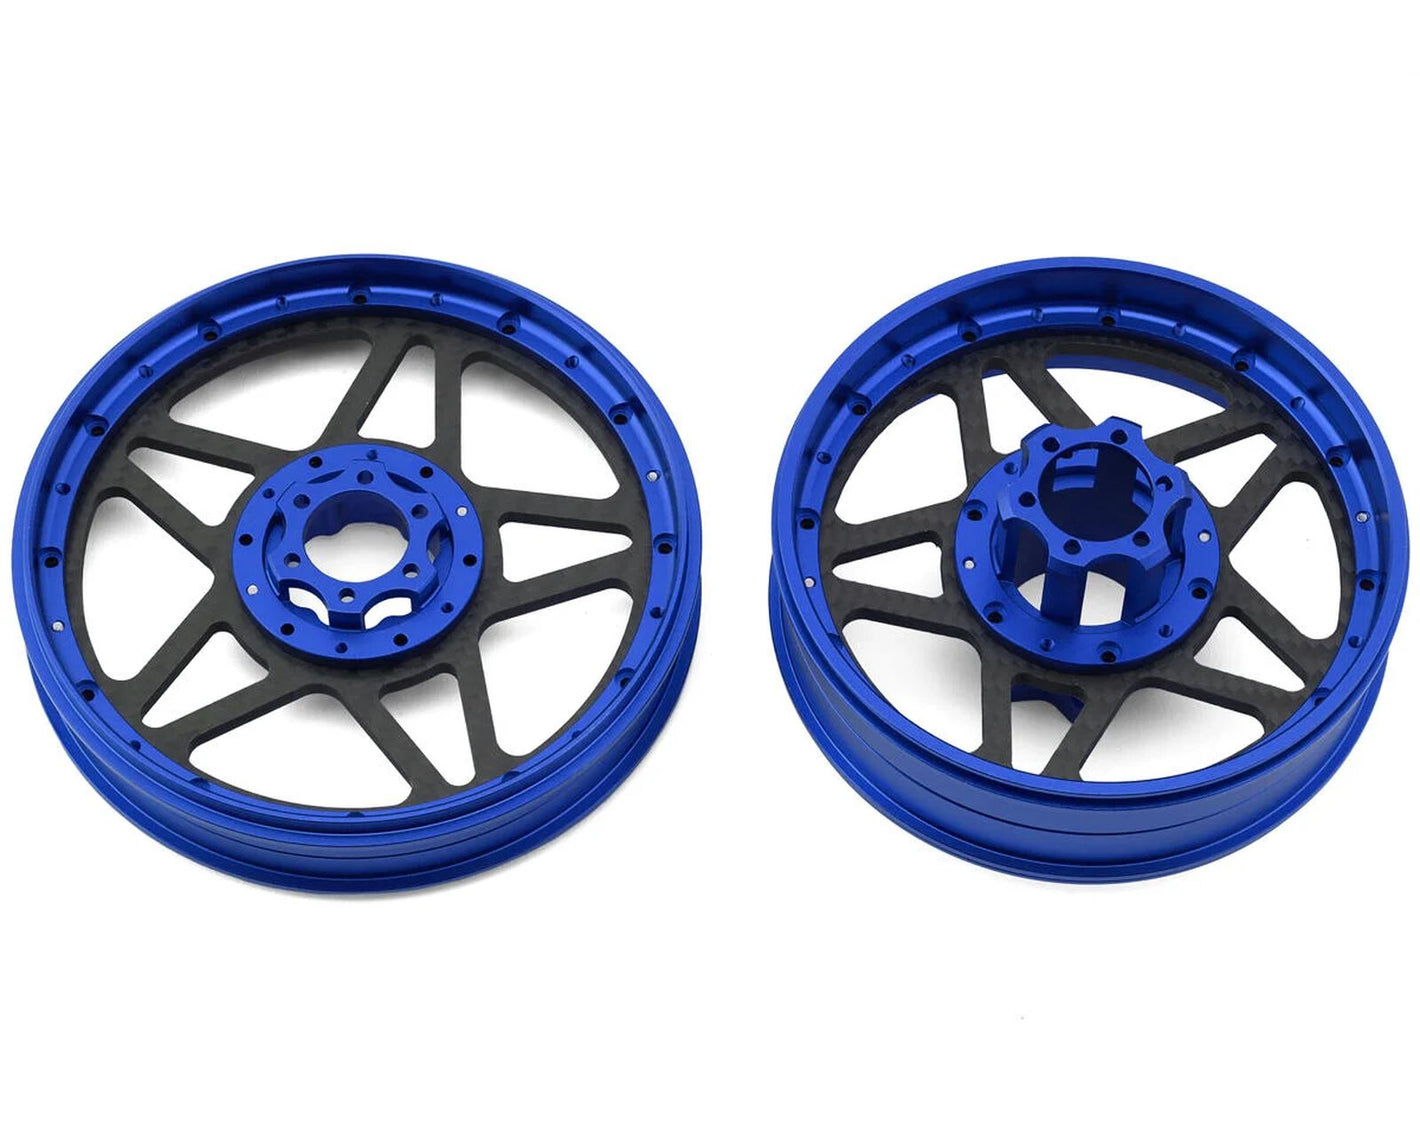 Losi Promoto MX CNC Aluminum Wheel Set w/Carbon Spokes (Blue)